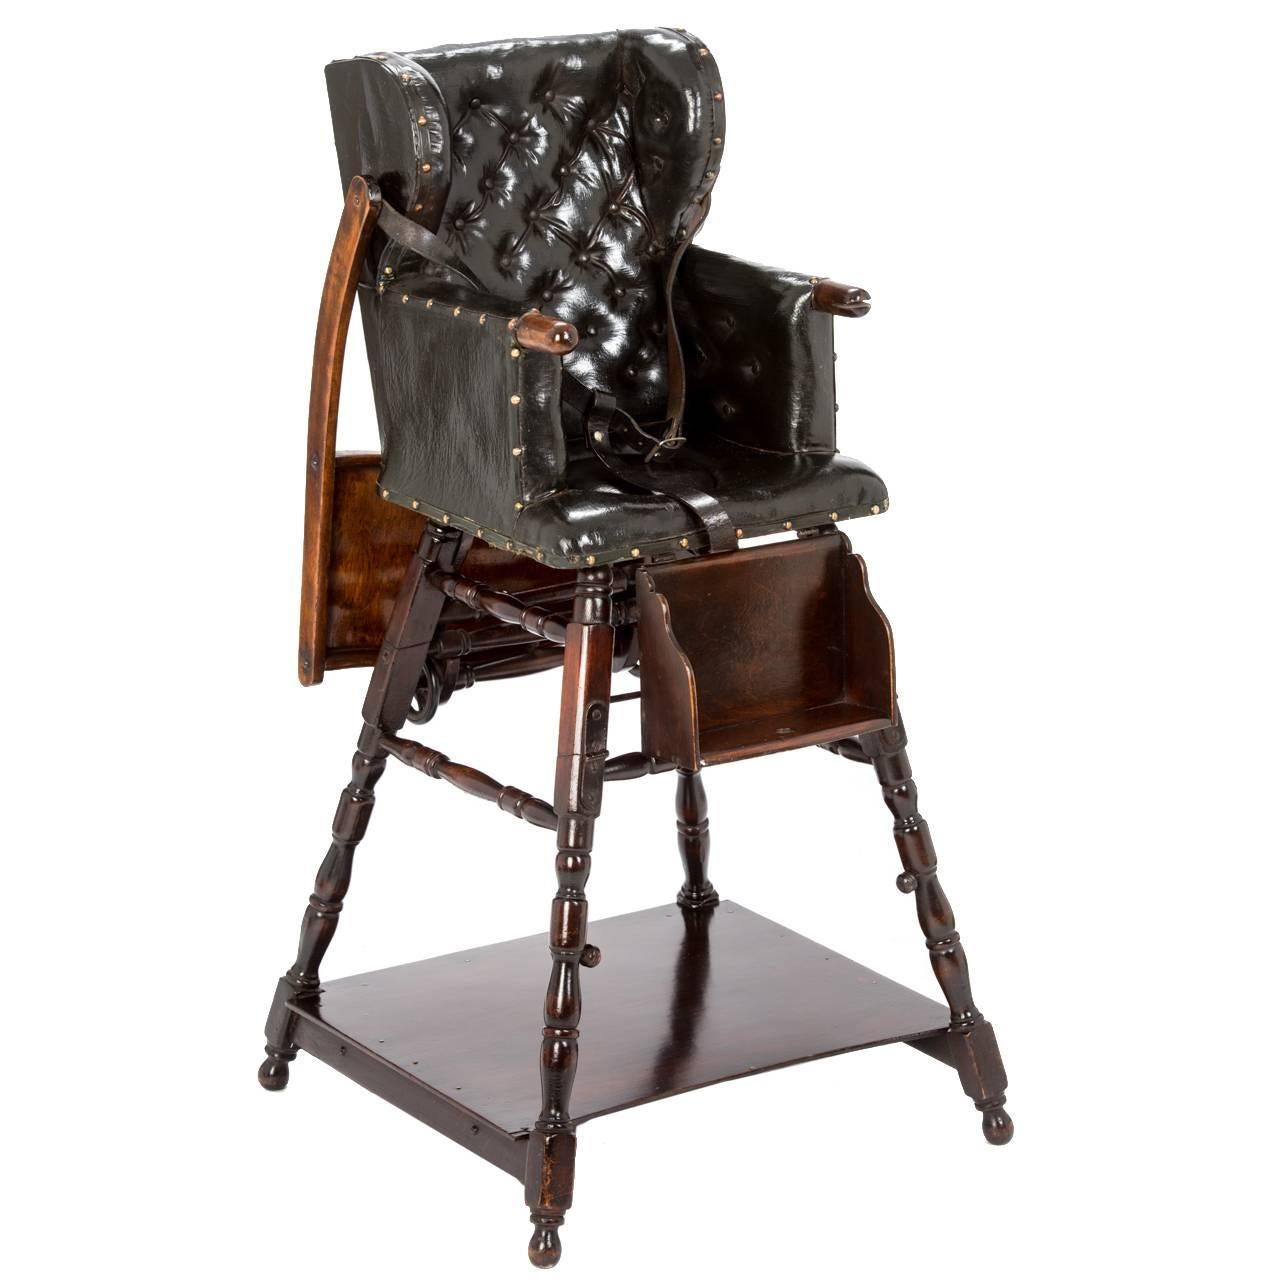 Delightful Original Edwardian Oak Metamorphic Childs High Chair. For Sale